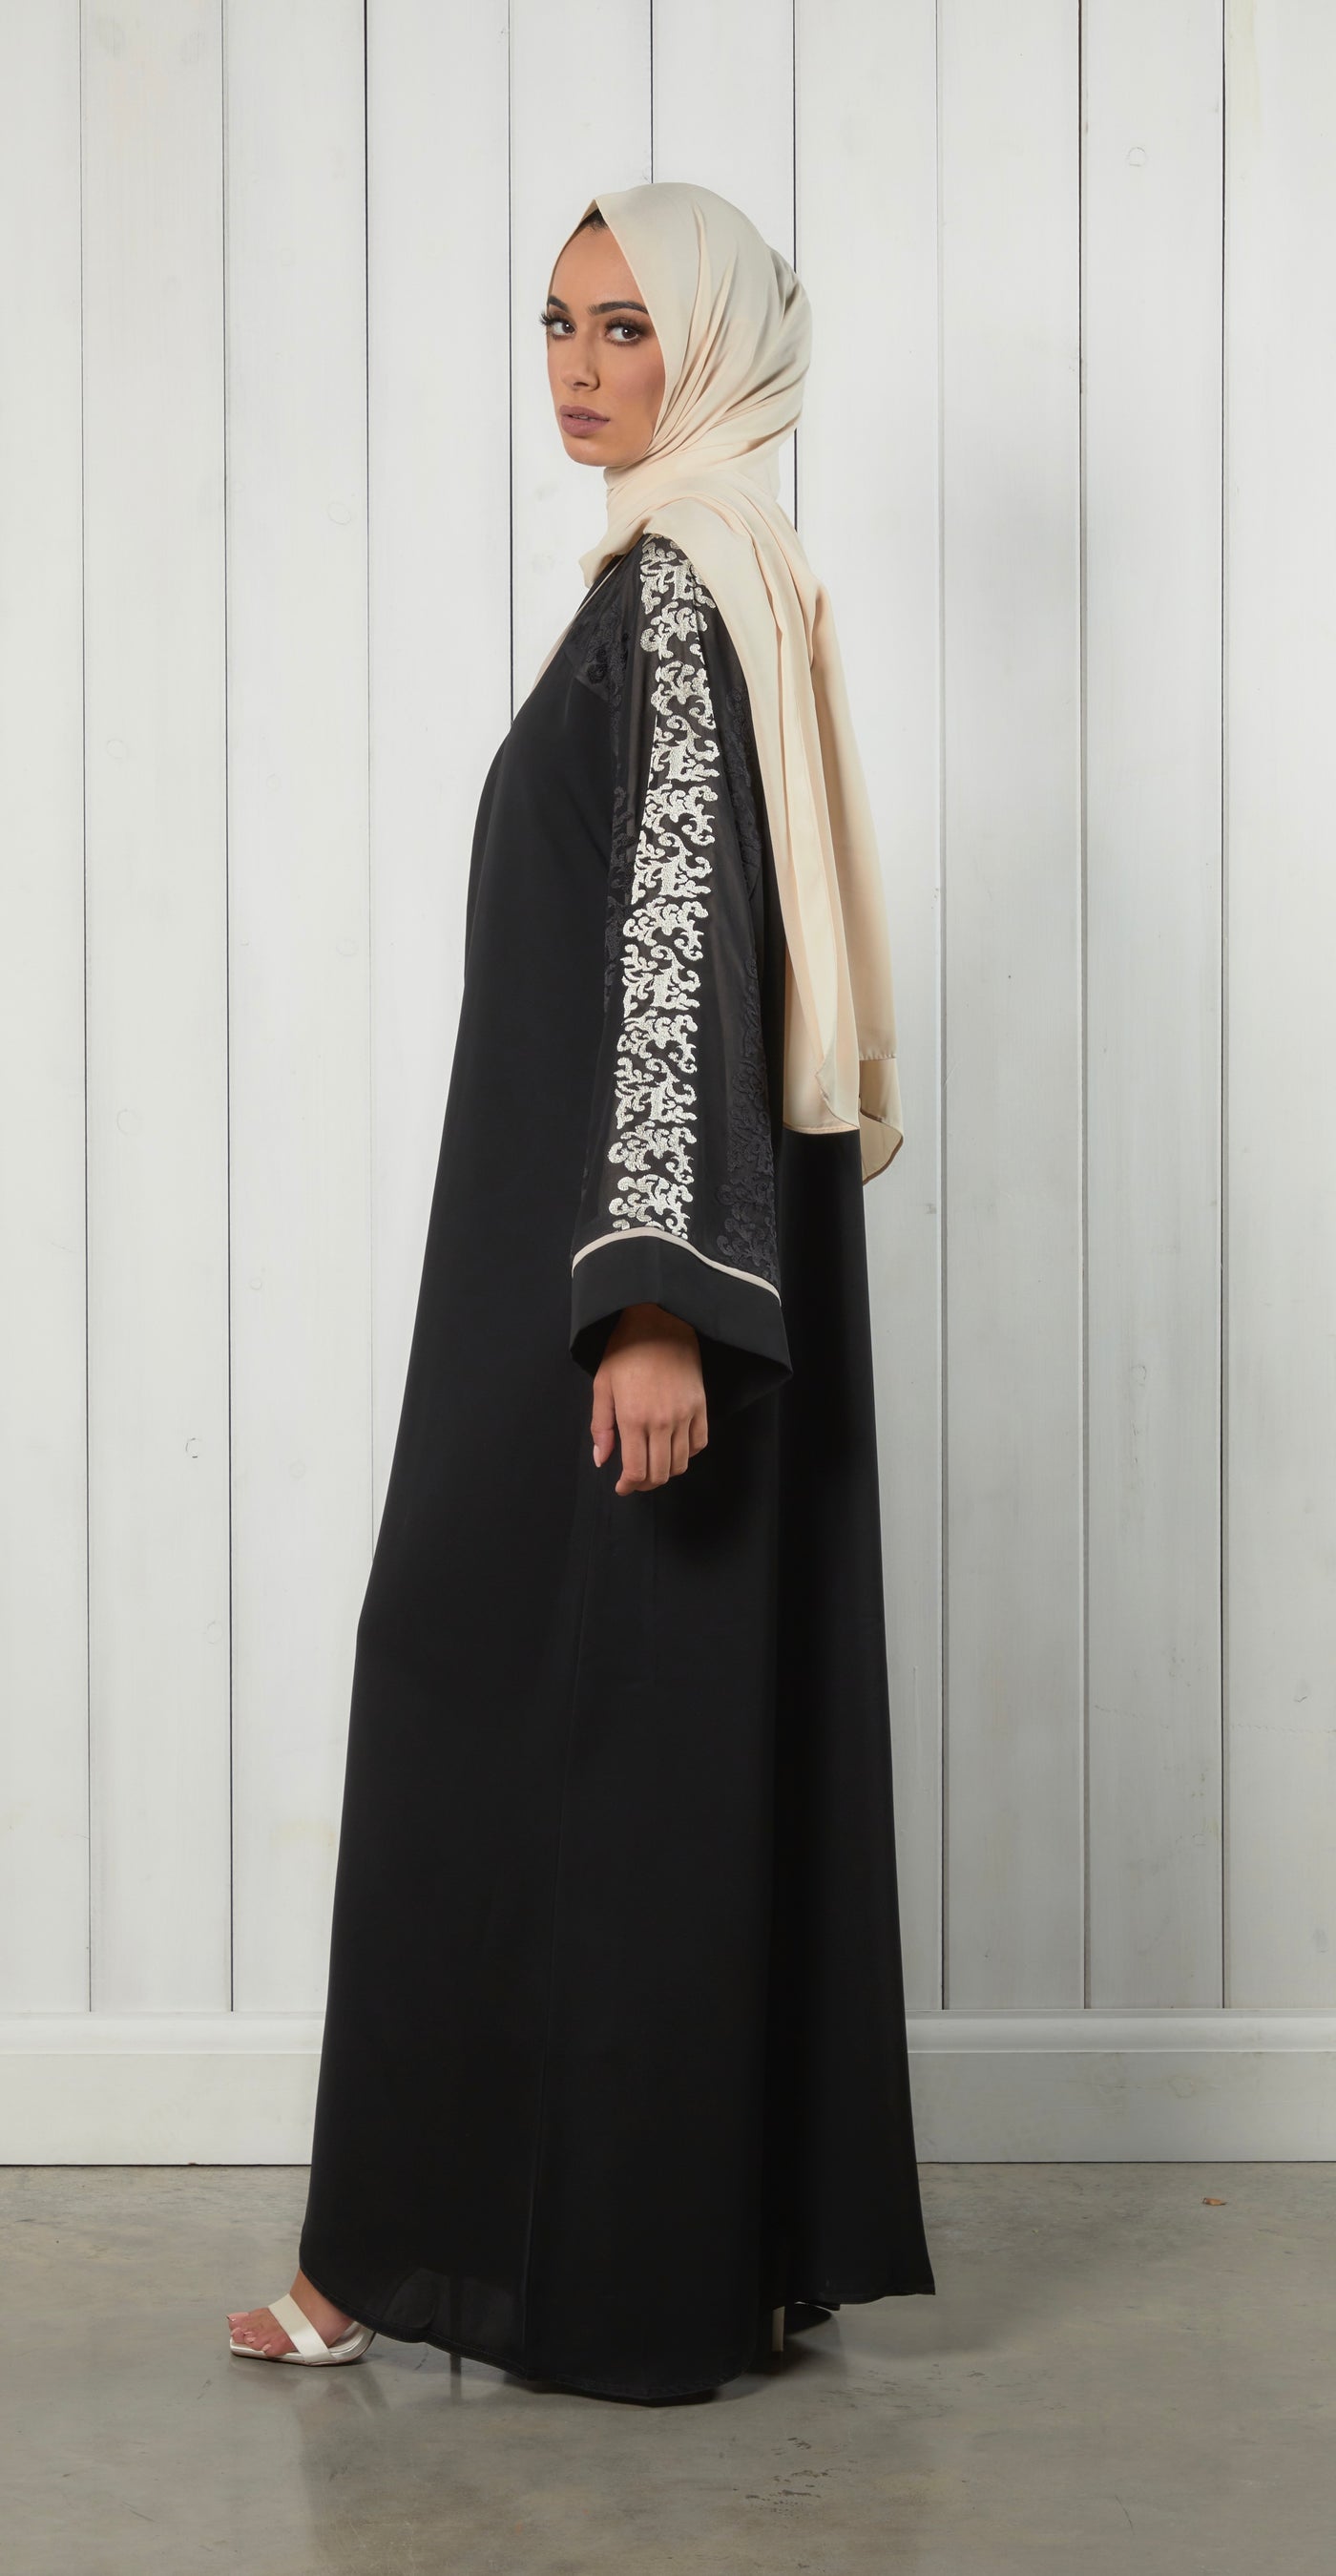 Reem Embroidered Abaya